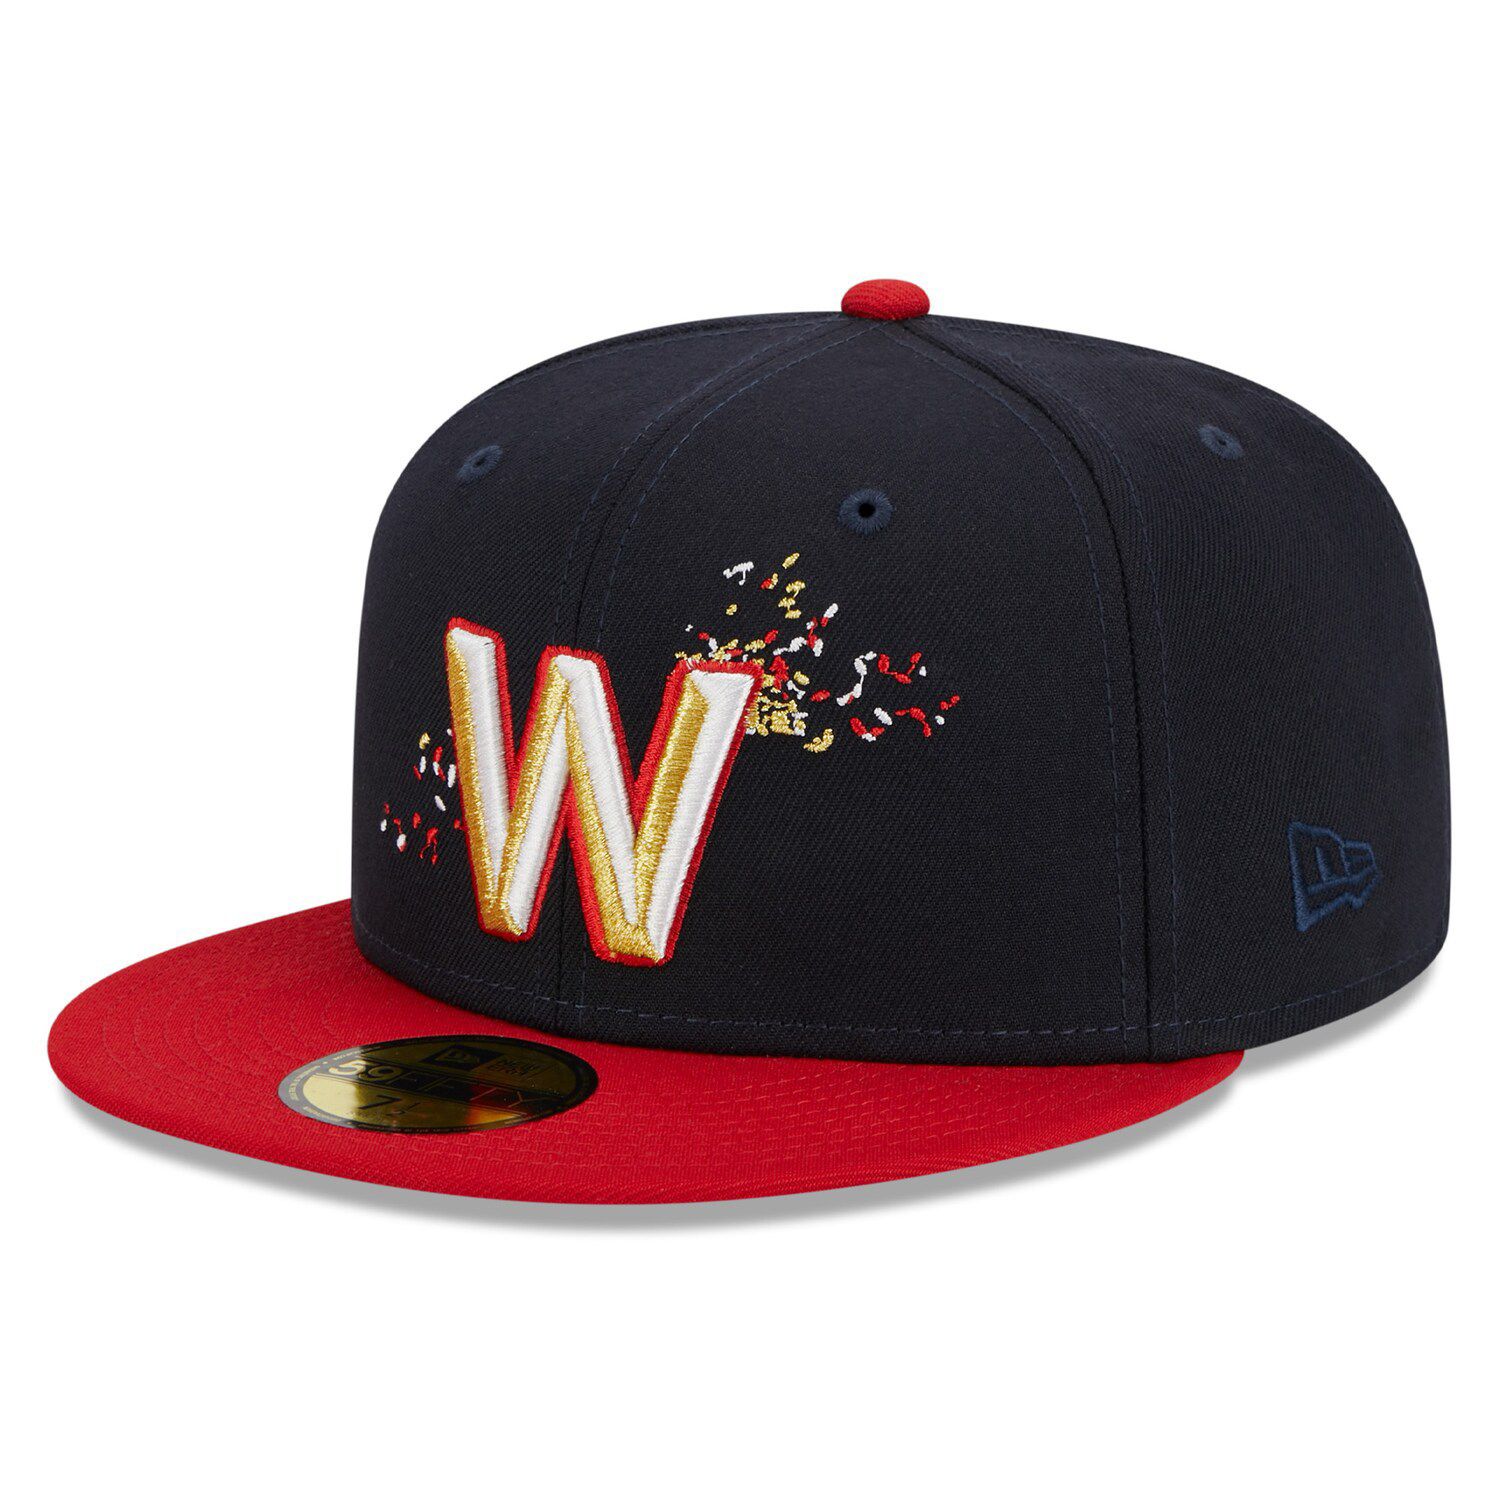 Washington Nationals New Era Chrome Sutash 59FIFTY Fitted Hat - Cream/Red